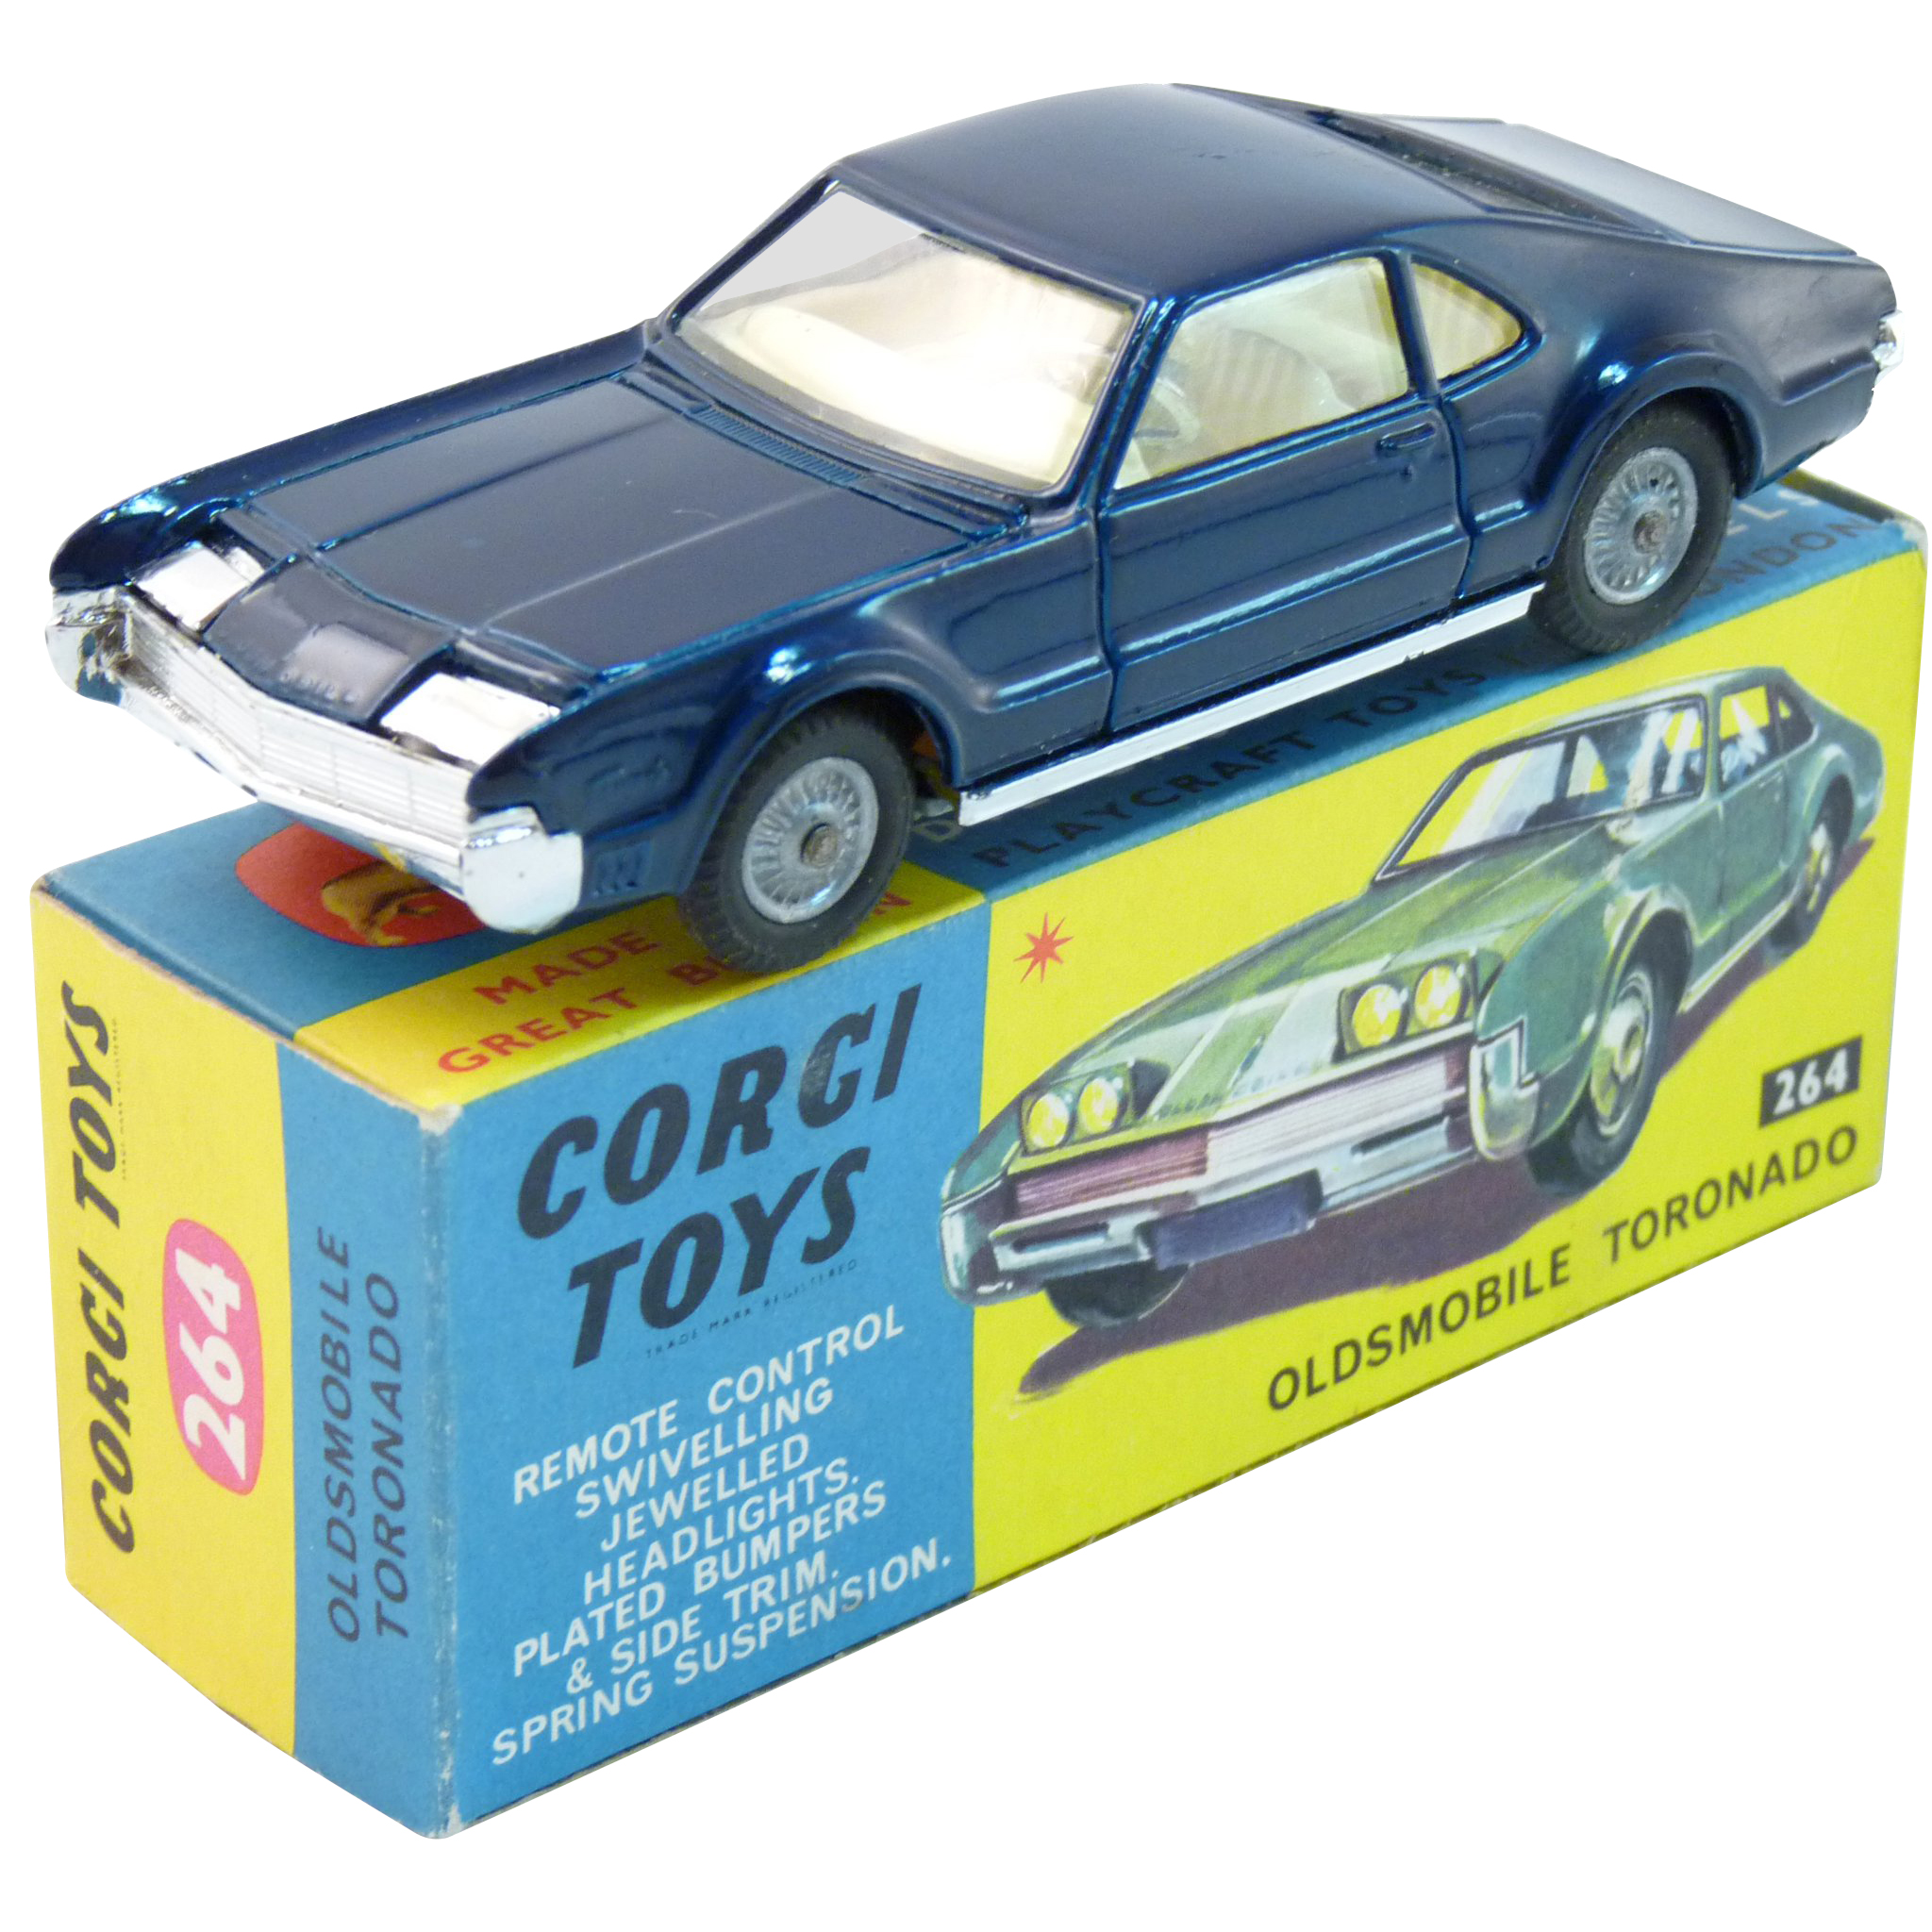 Rare vintage BATMOBILE diecast Corgi toys of 60's made in GT BRITAIN.